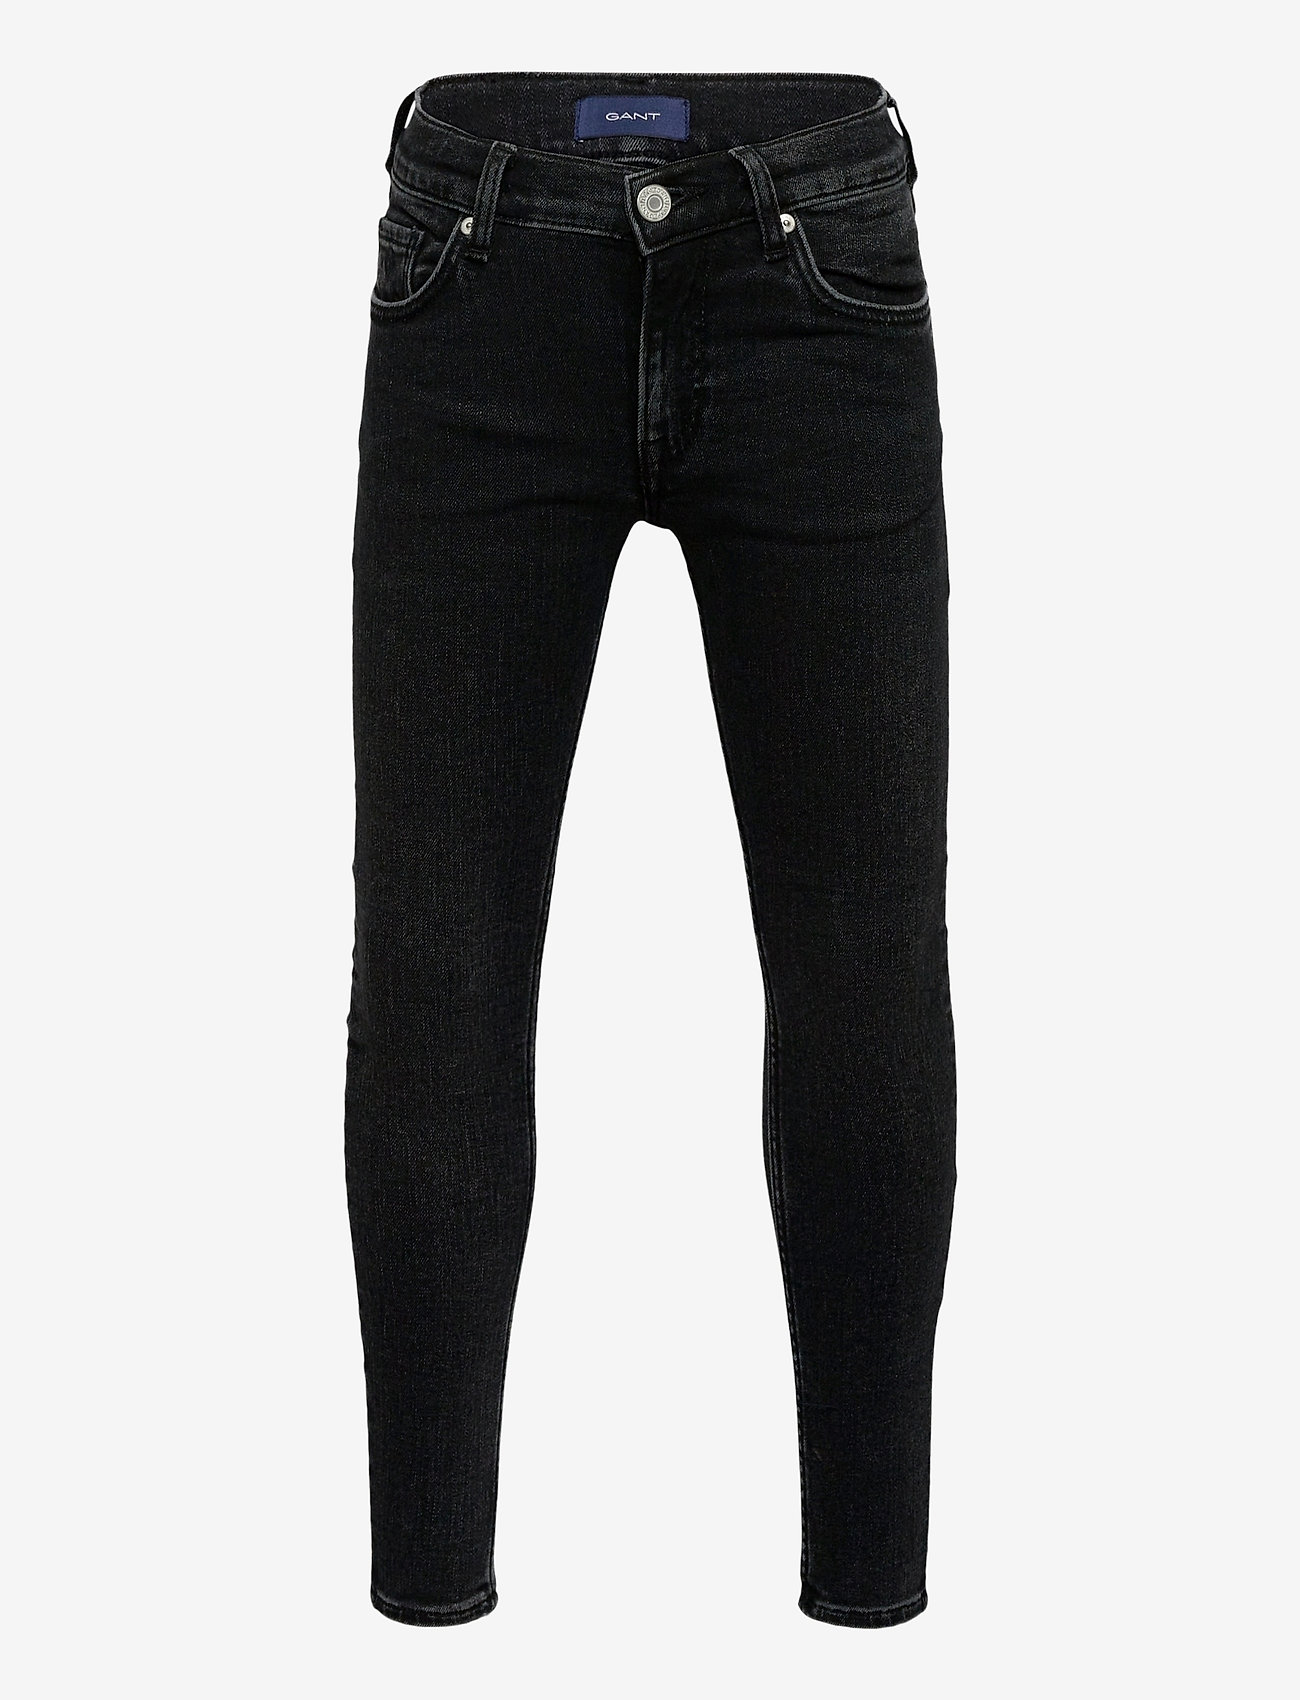 Gant Skinny Jeans (Black Raw) (44.85 